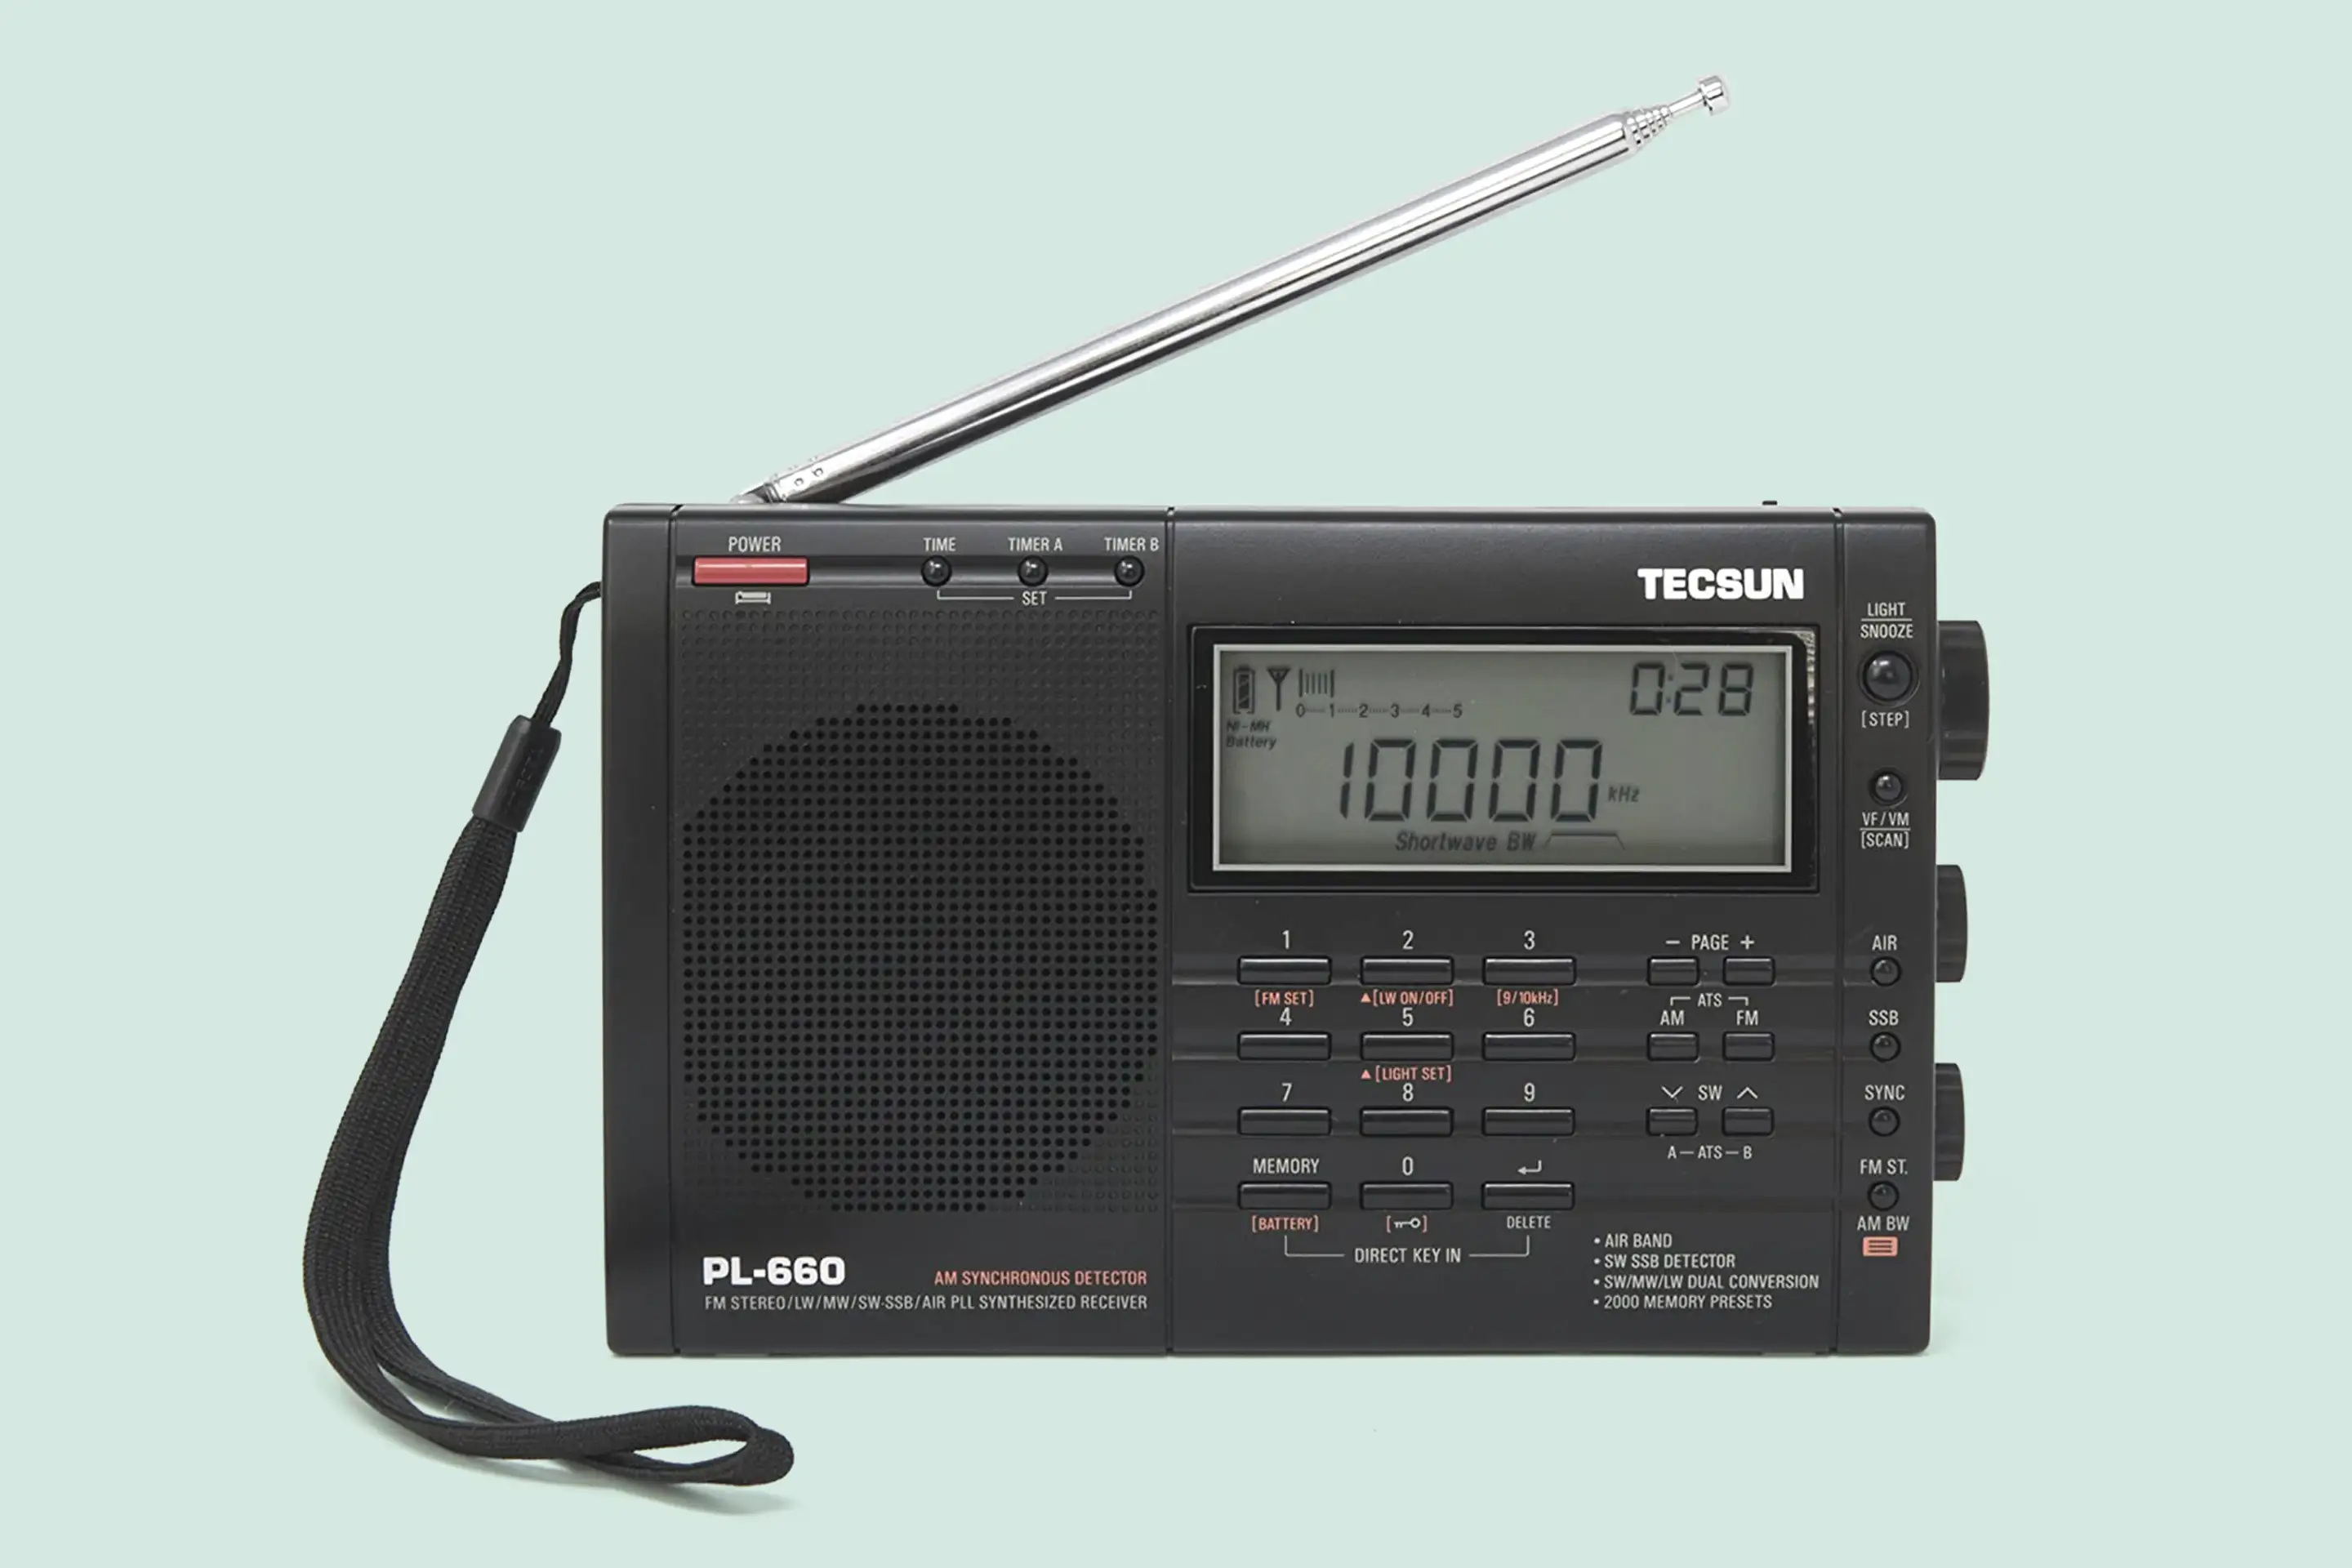 TECSUN PL 660 Portable Shortwave World Band Radio